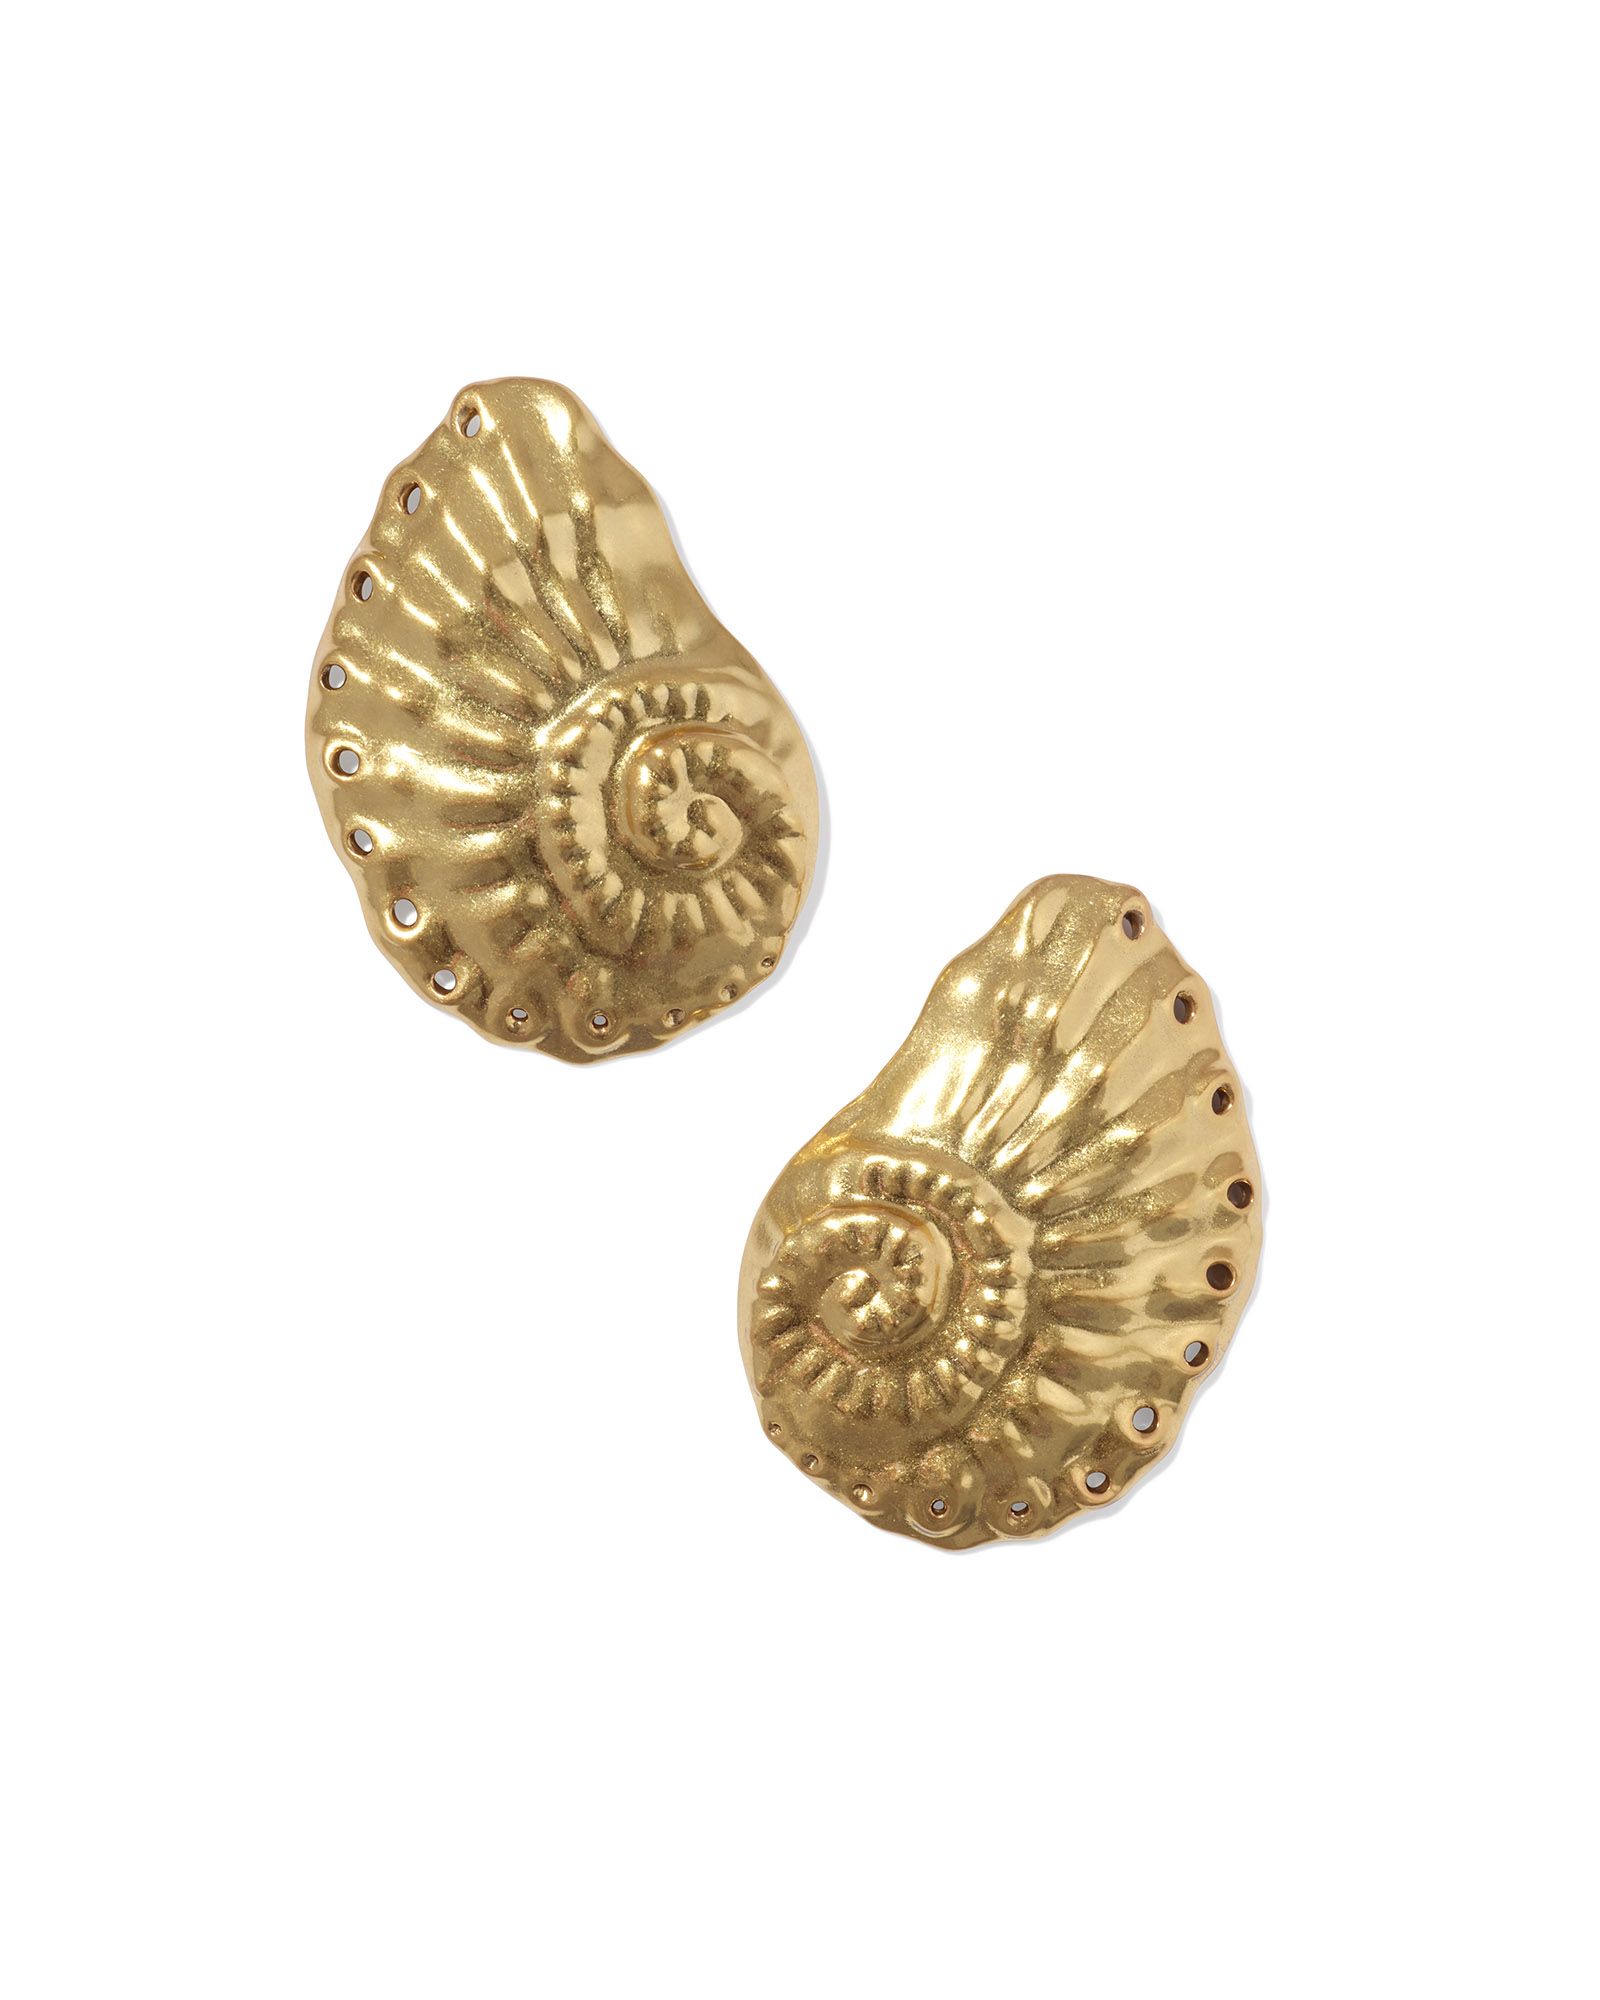 Marina Statement Stud Earrings in Vintage Gold | Kendra Scott